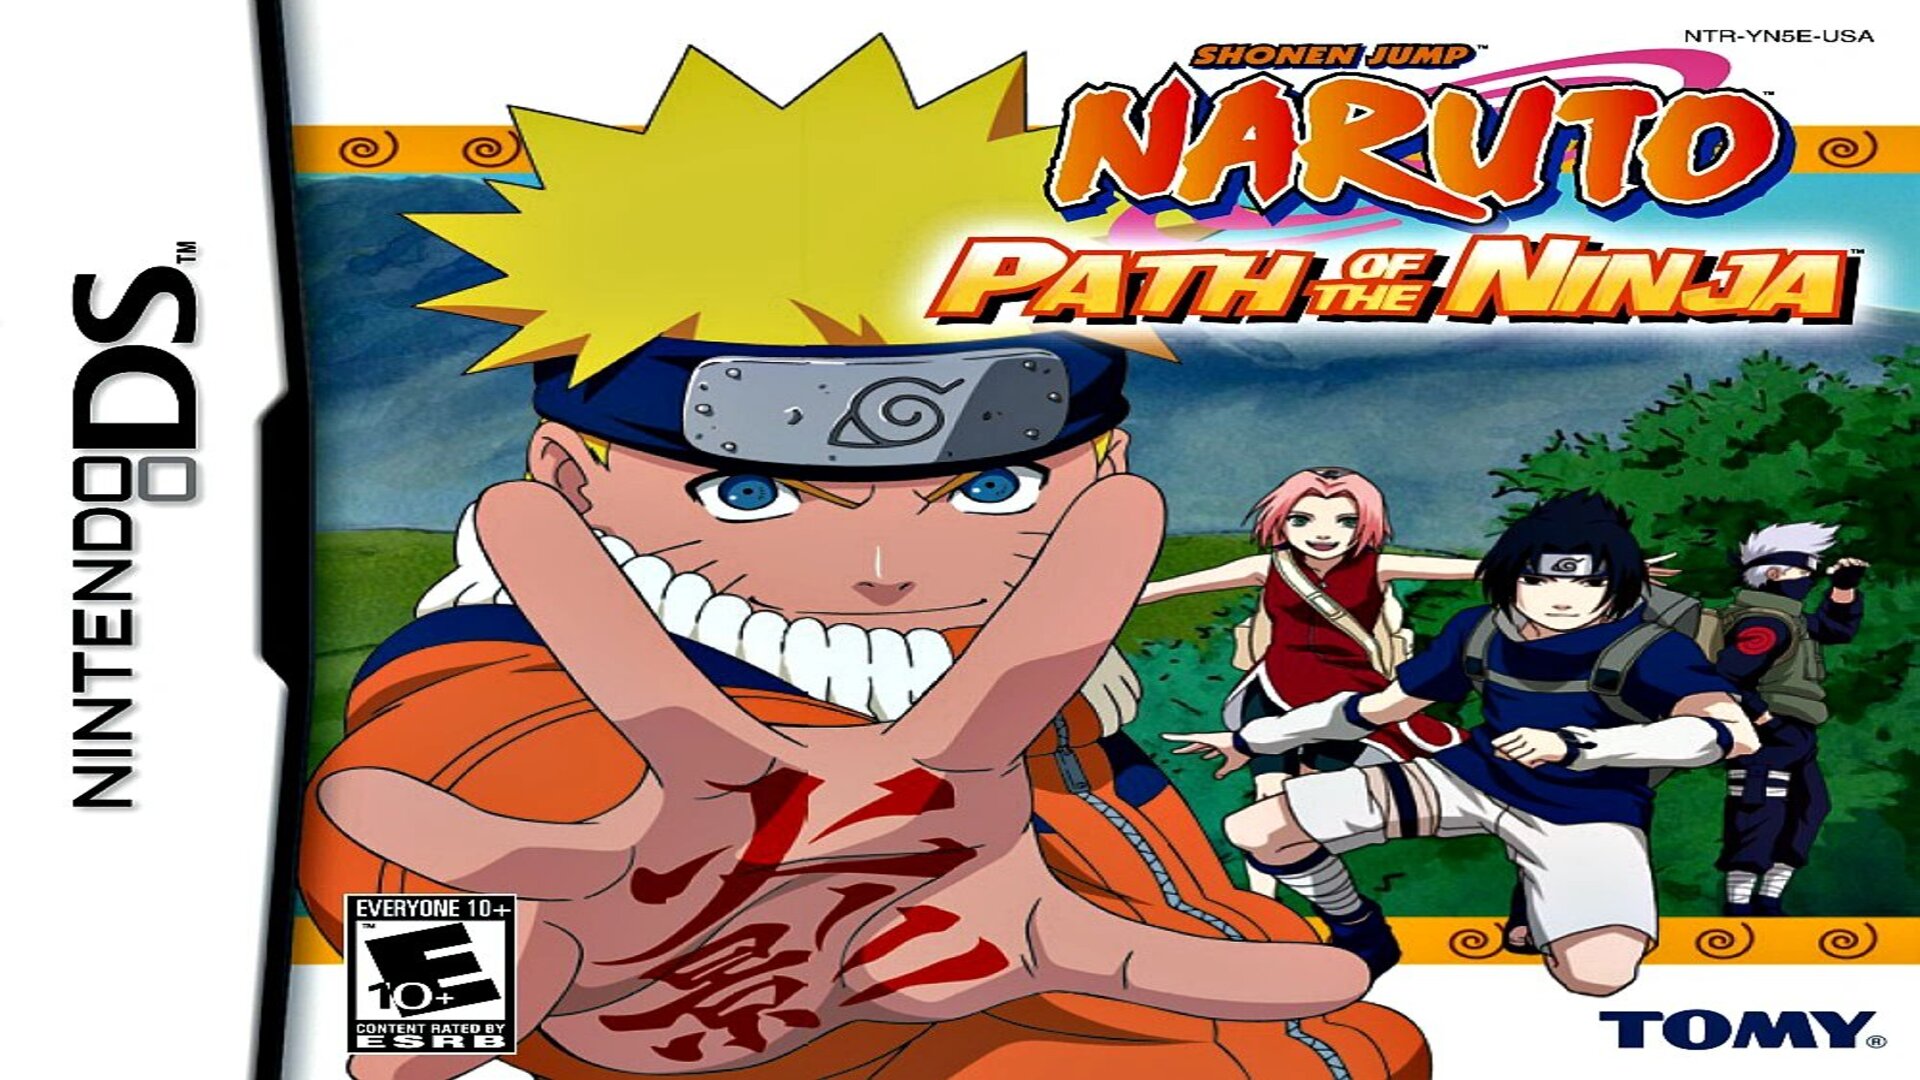 Todos-os-jogos-de-Naruto-ja-lancados-Path-of-the-Ninja